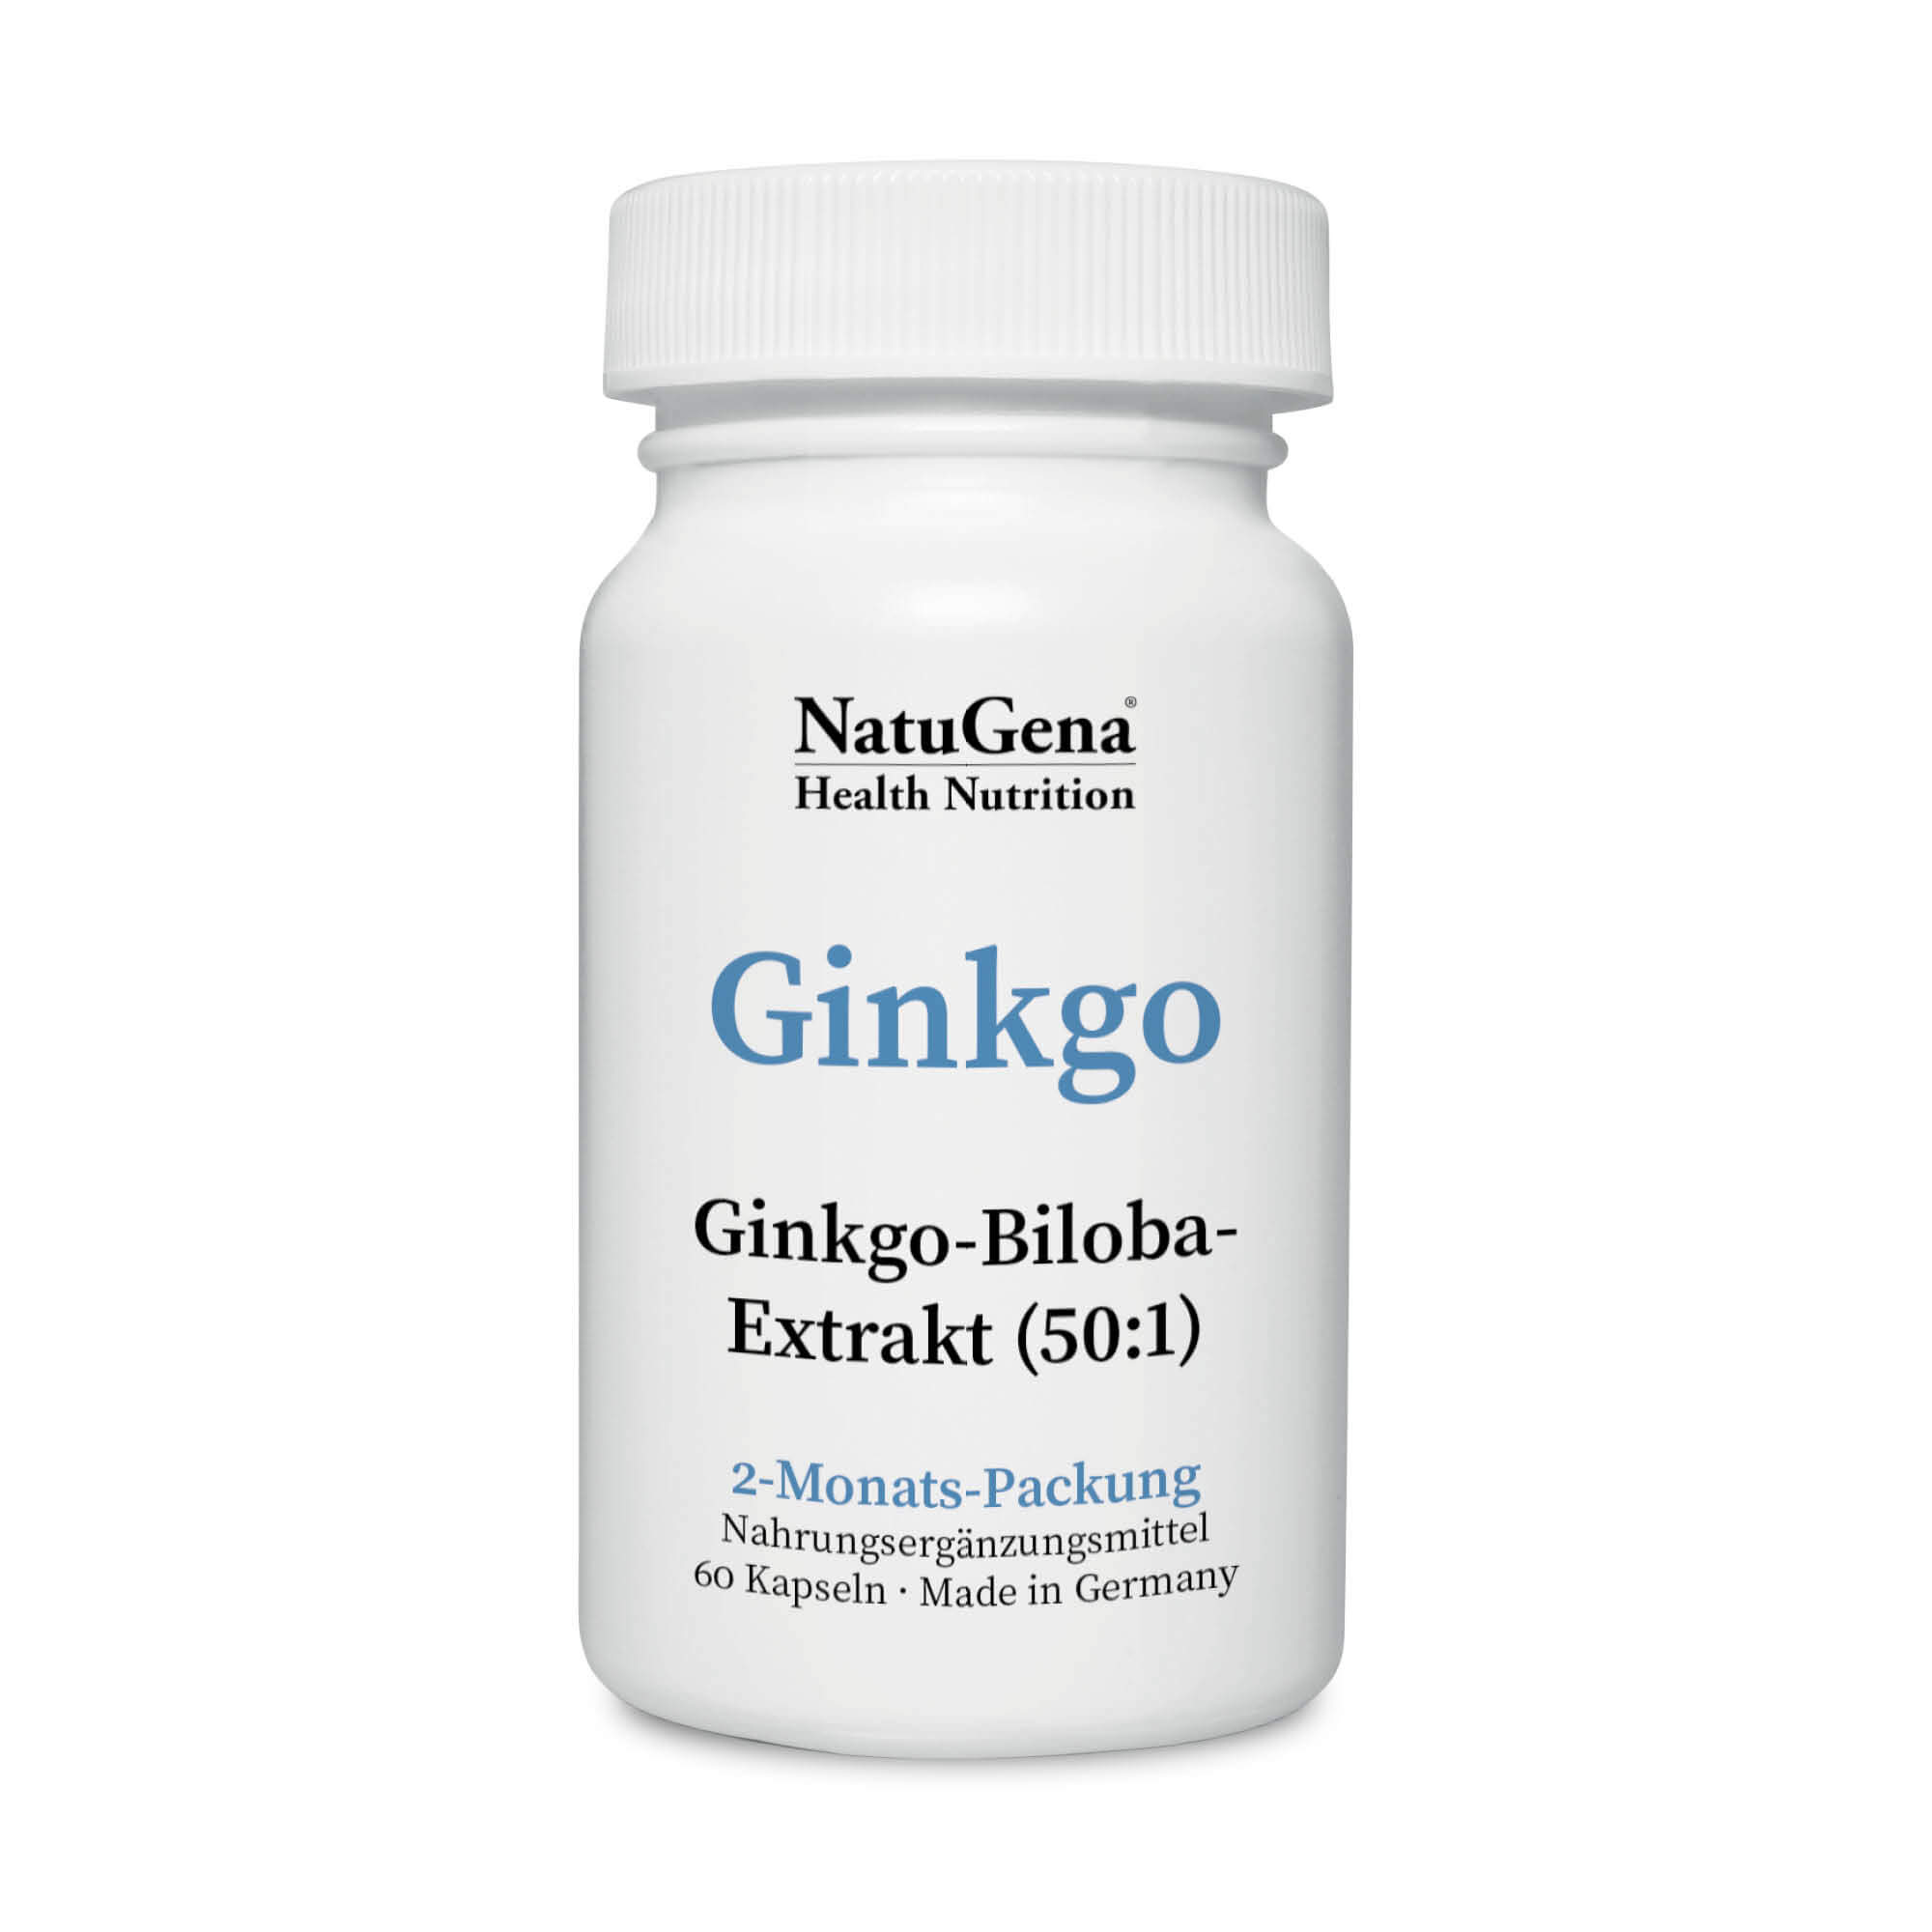 NatuGena Ginkgo | 60 Kapseln | Ginkgo-Biloba-Extrakt 50:1